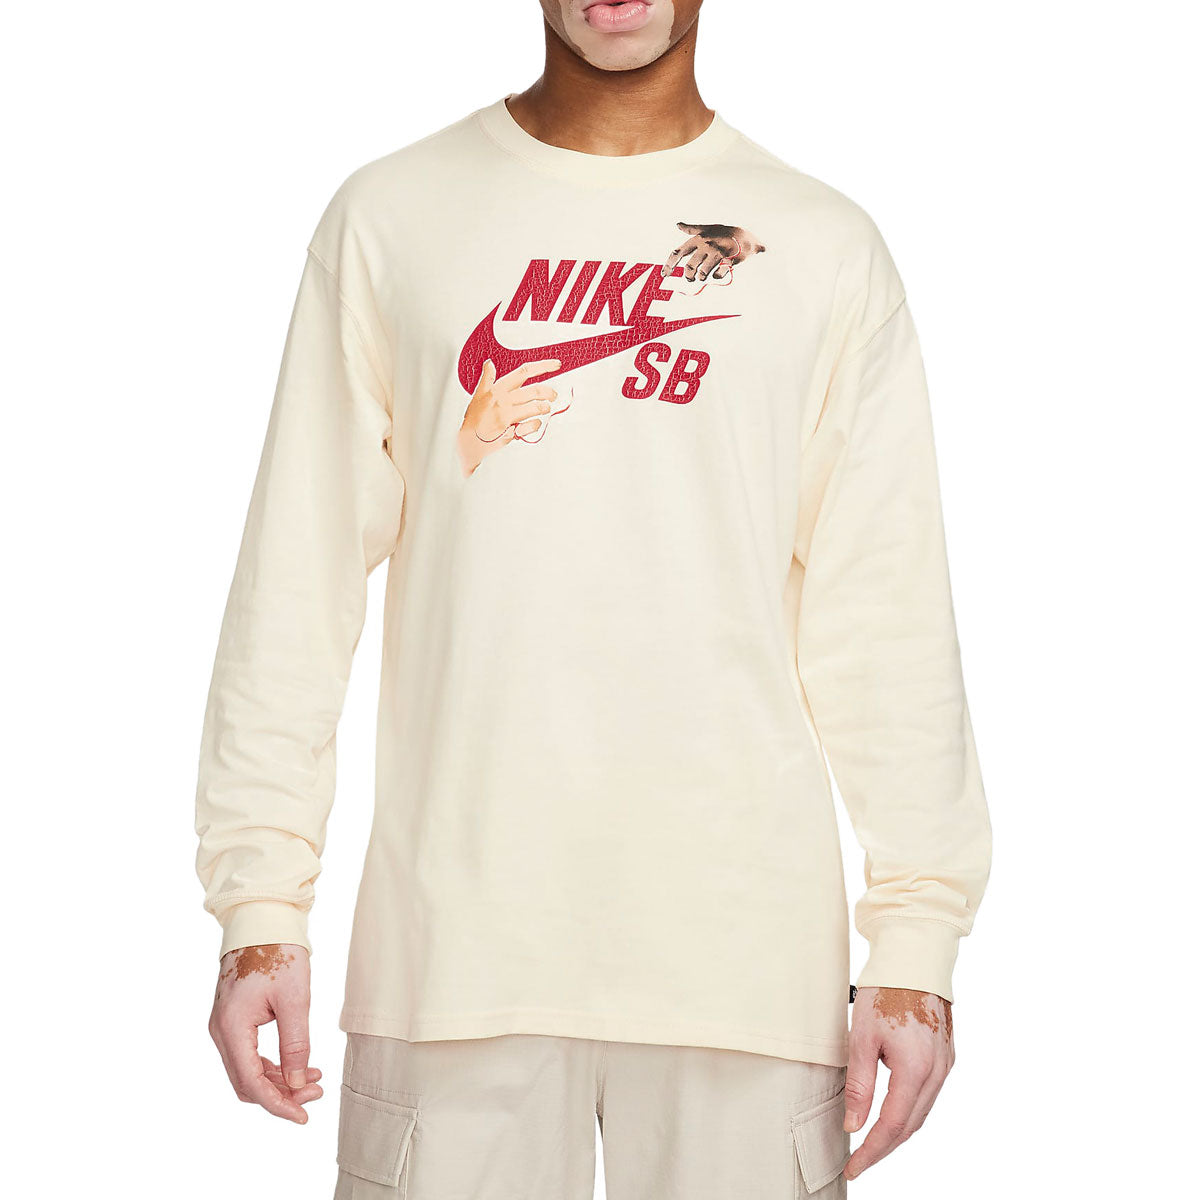 Nike SB The Reach Long Sleeve T-Shirt - Coconut Milk image 2